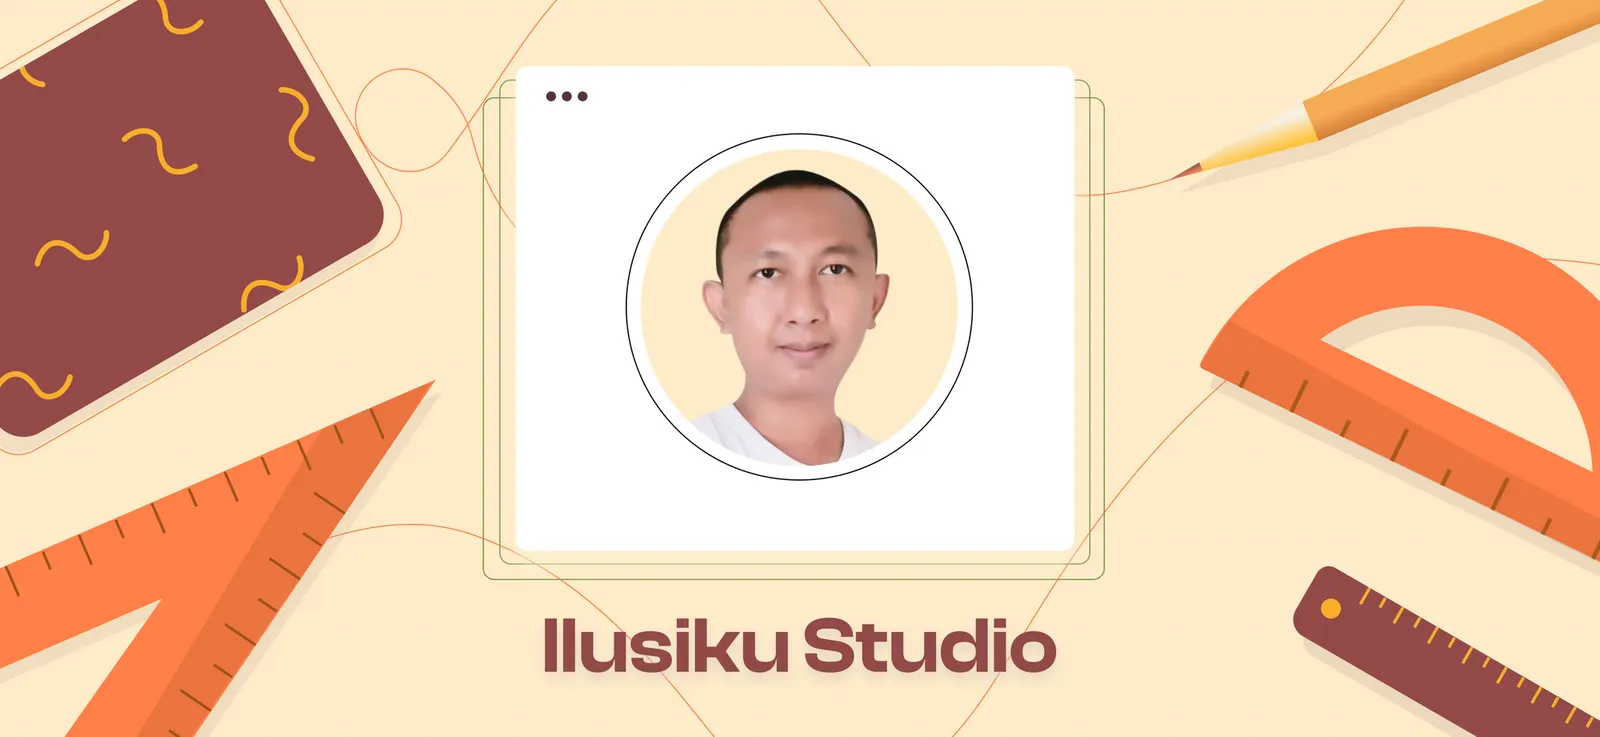 Designer Interview | Ilusiku Studio